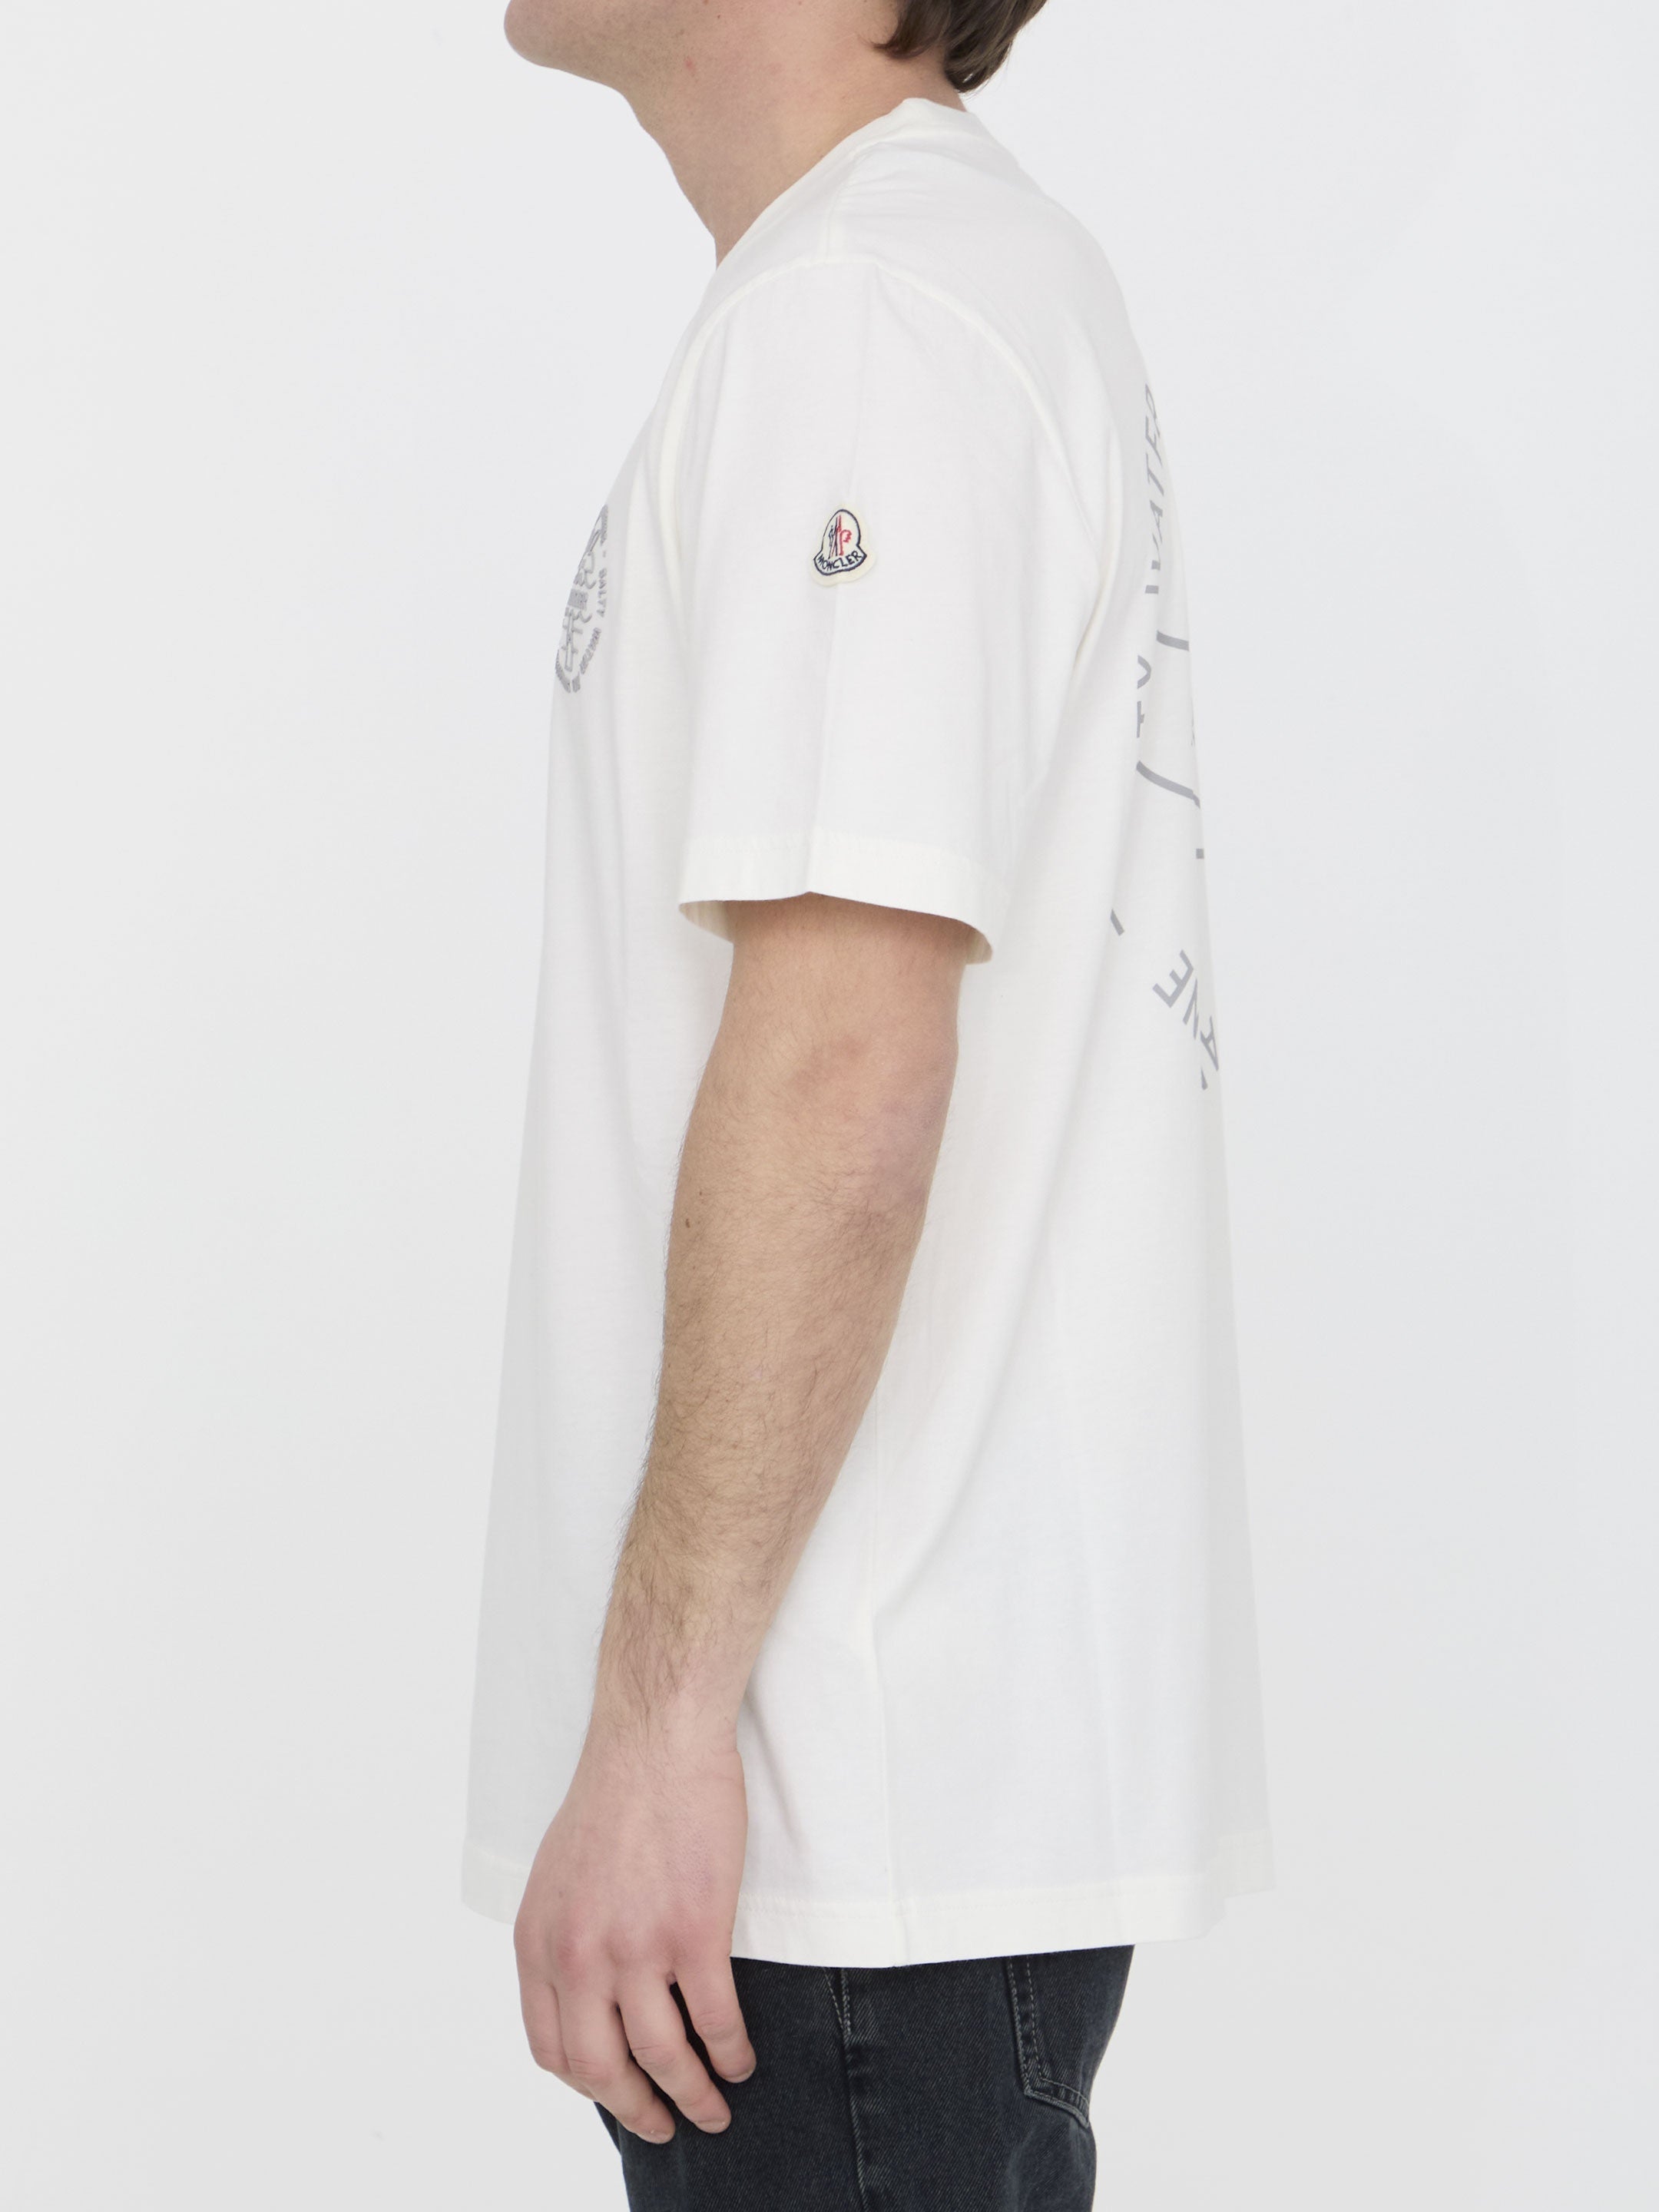 MONCLER-OUTLET-SALE-Cotton-t-shirt-Shirts-L-WHITE-ARCHIVE-COLLECTION-3.jpg